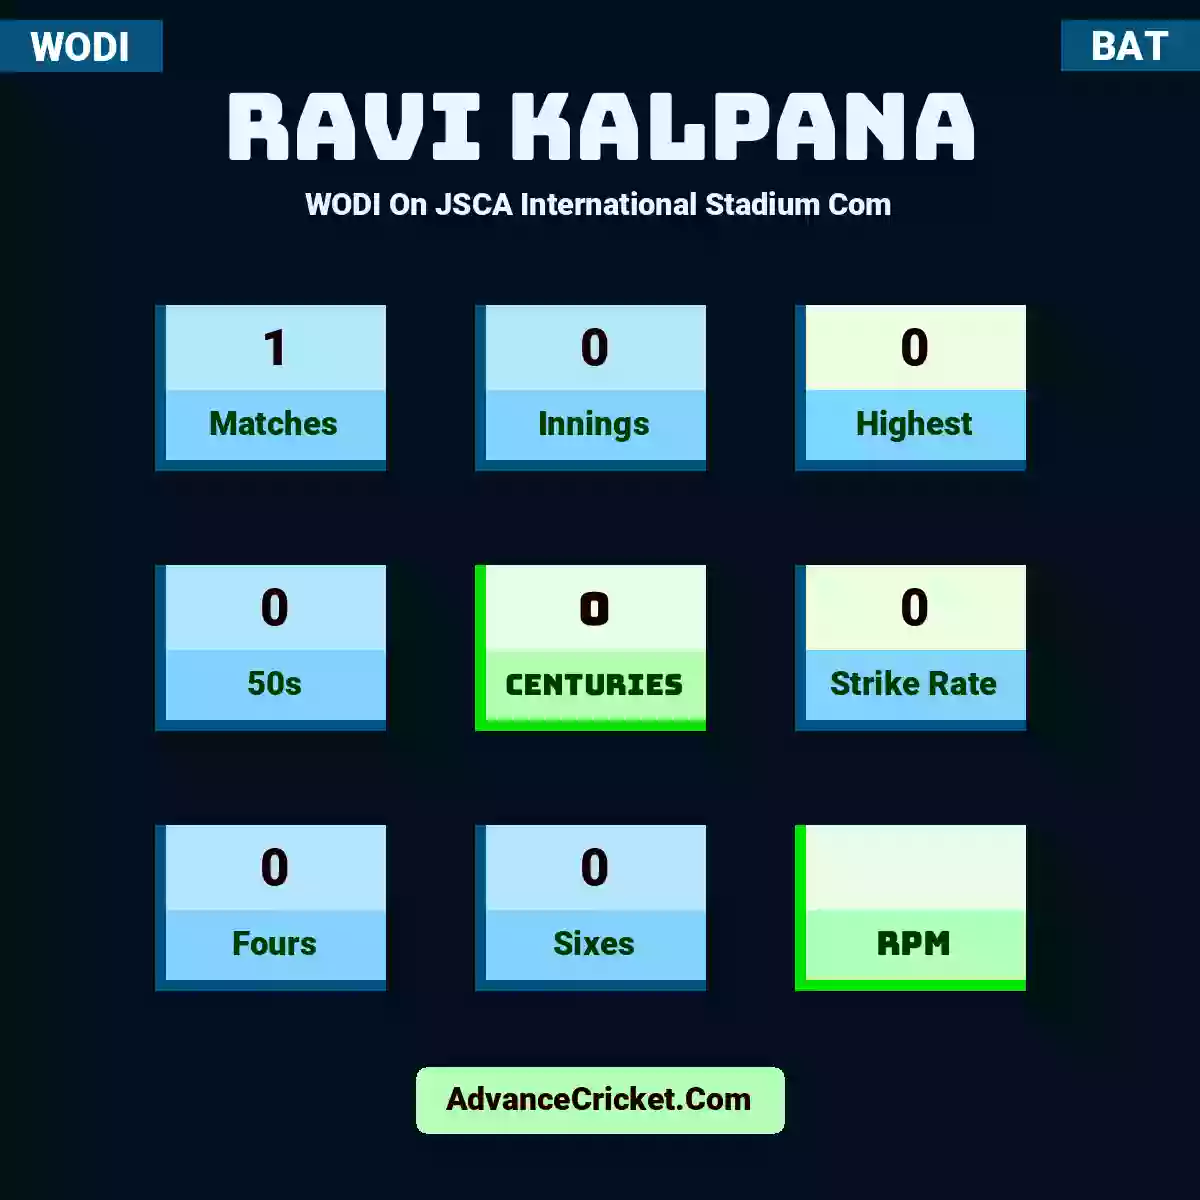 Ravi Kalpana WODI  On JSCA International Stadium Com, Ravi Kalpana played 1 matches, scored 0 runs as highest, 0 half-centuries, and 0 centuries, with a strike rate of 0. R.Kalpana hit 0 fours and 0 sixes.